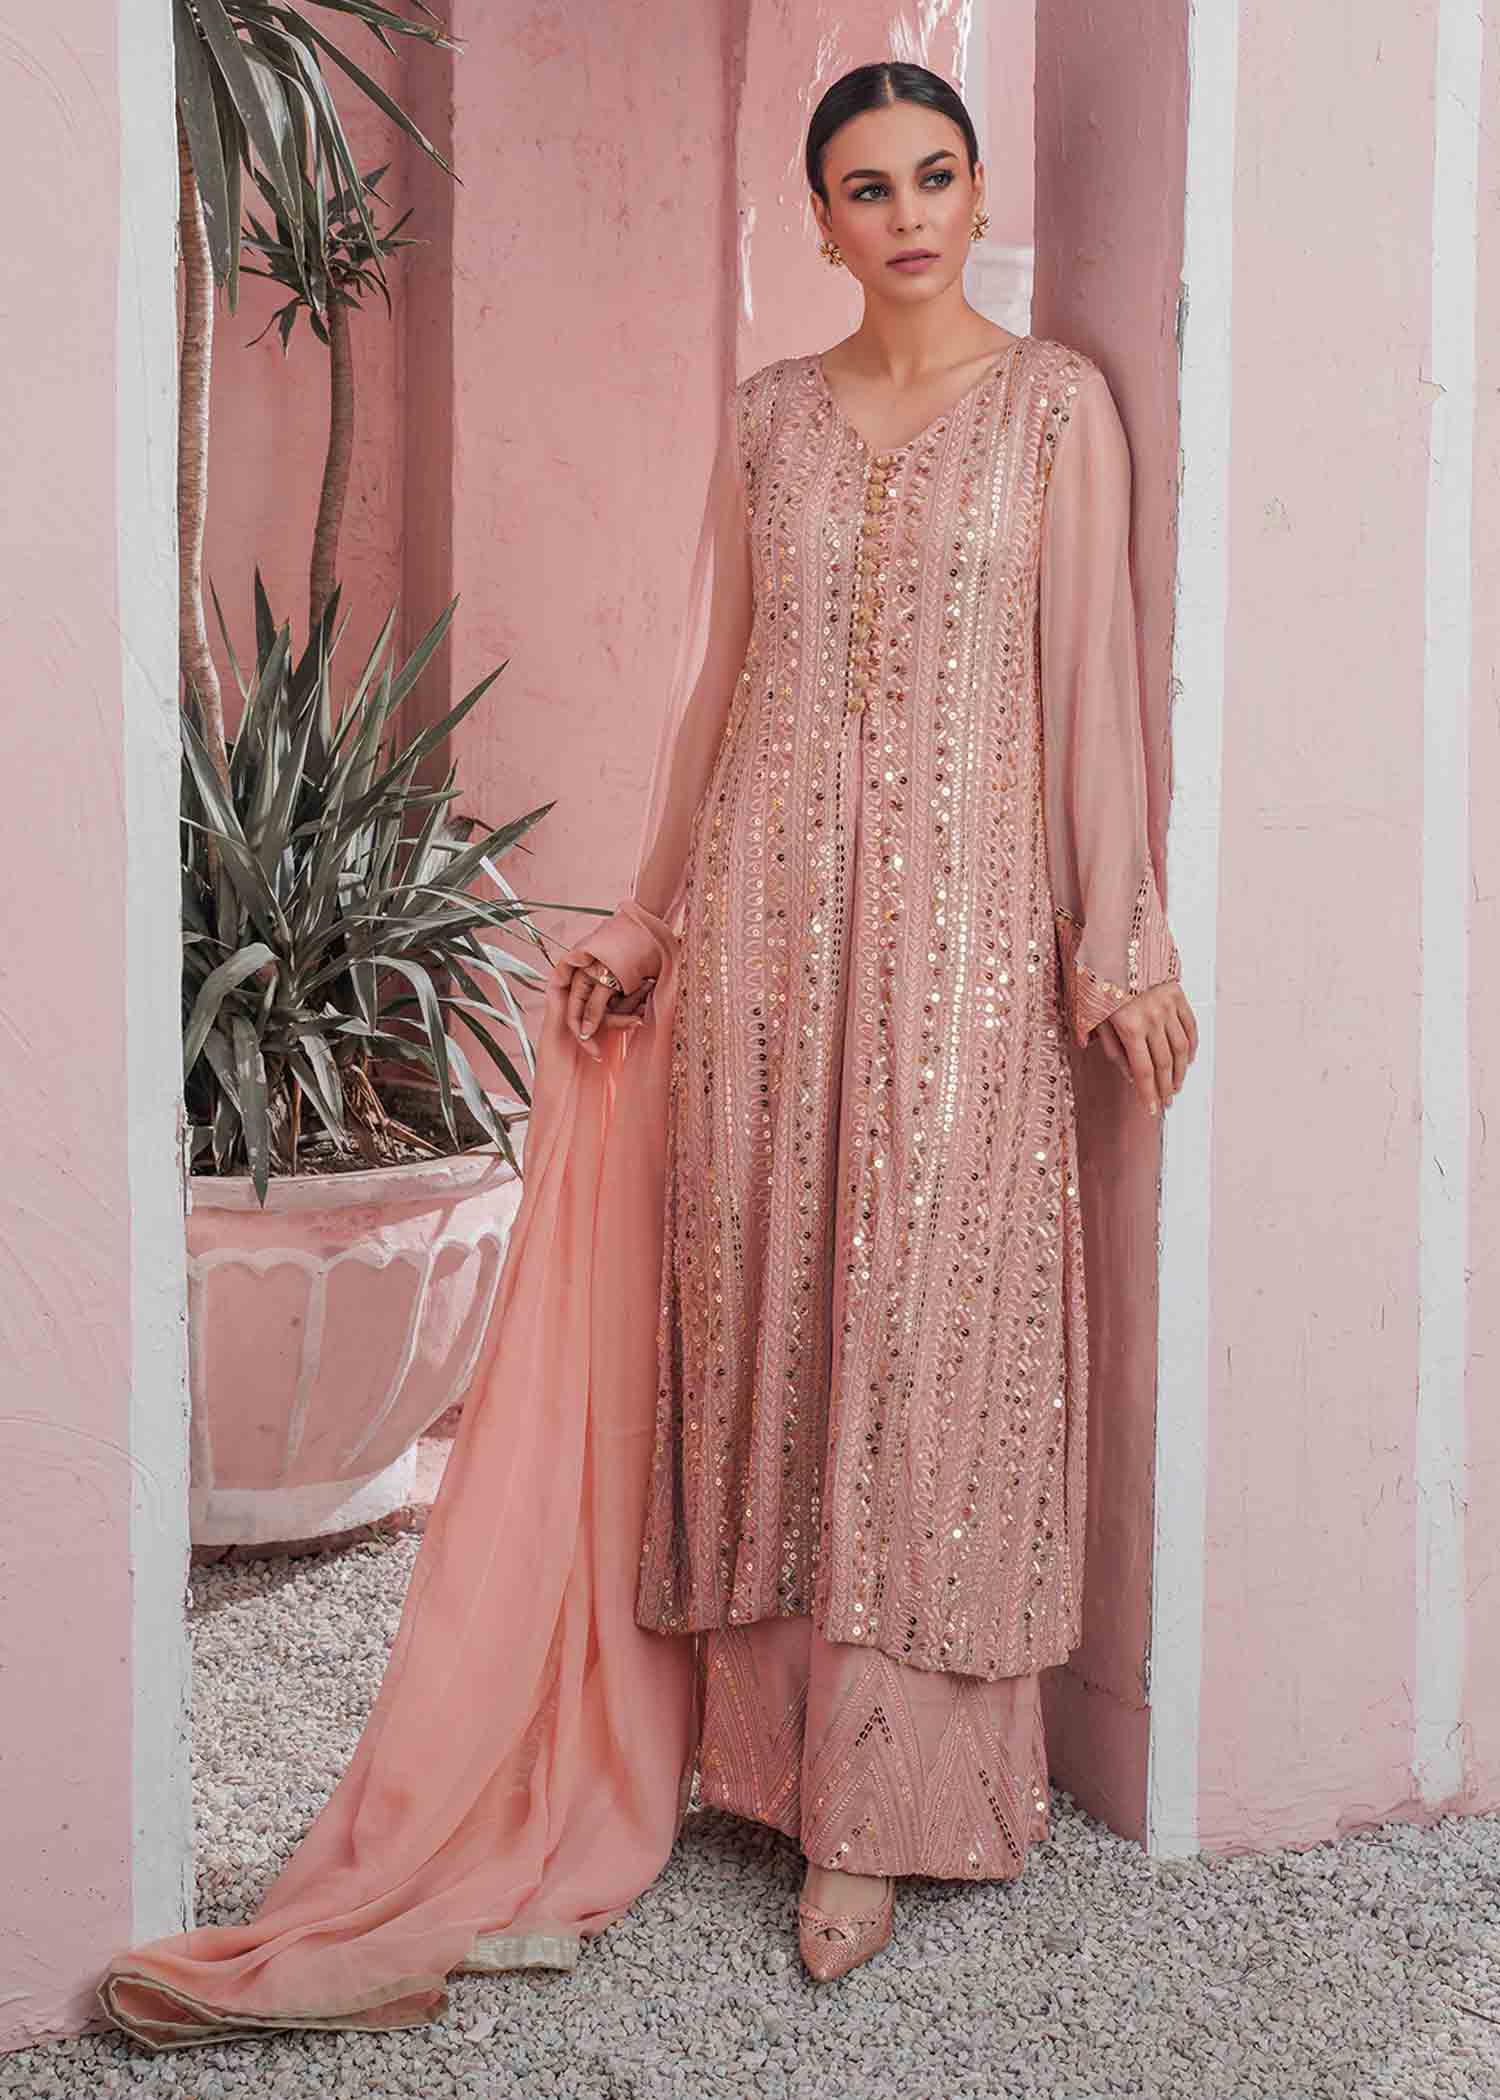 Pakistani Formal Wear, Pakistani Wedding Formal Heavily Embellished Dresses,  Pakistani Wedding Wear - Etsy